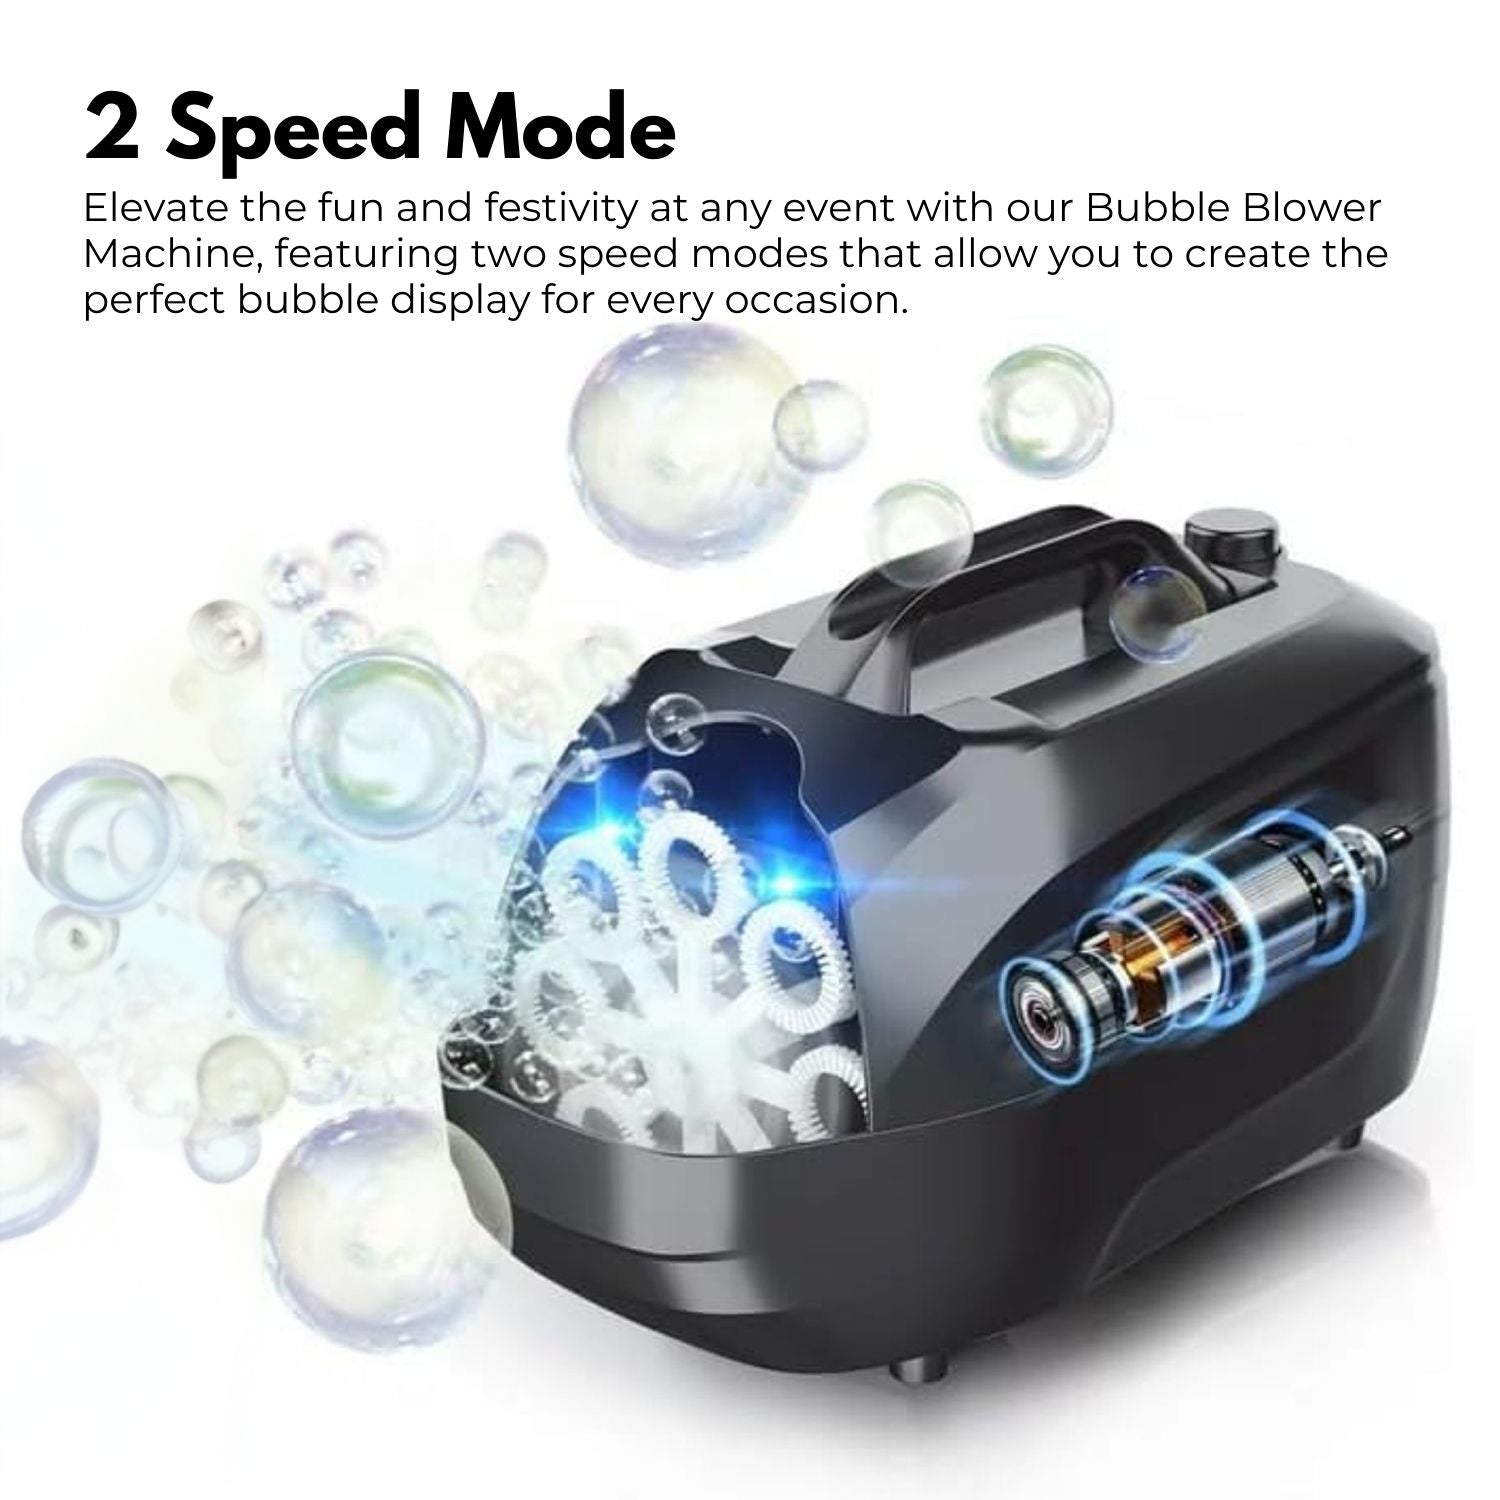 GOMINIMO Automatic Bubble Blower Machine for Kids (Black) GO-ABBM-100-JH